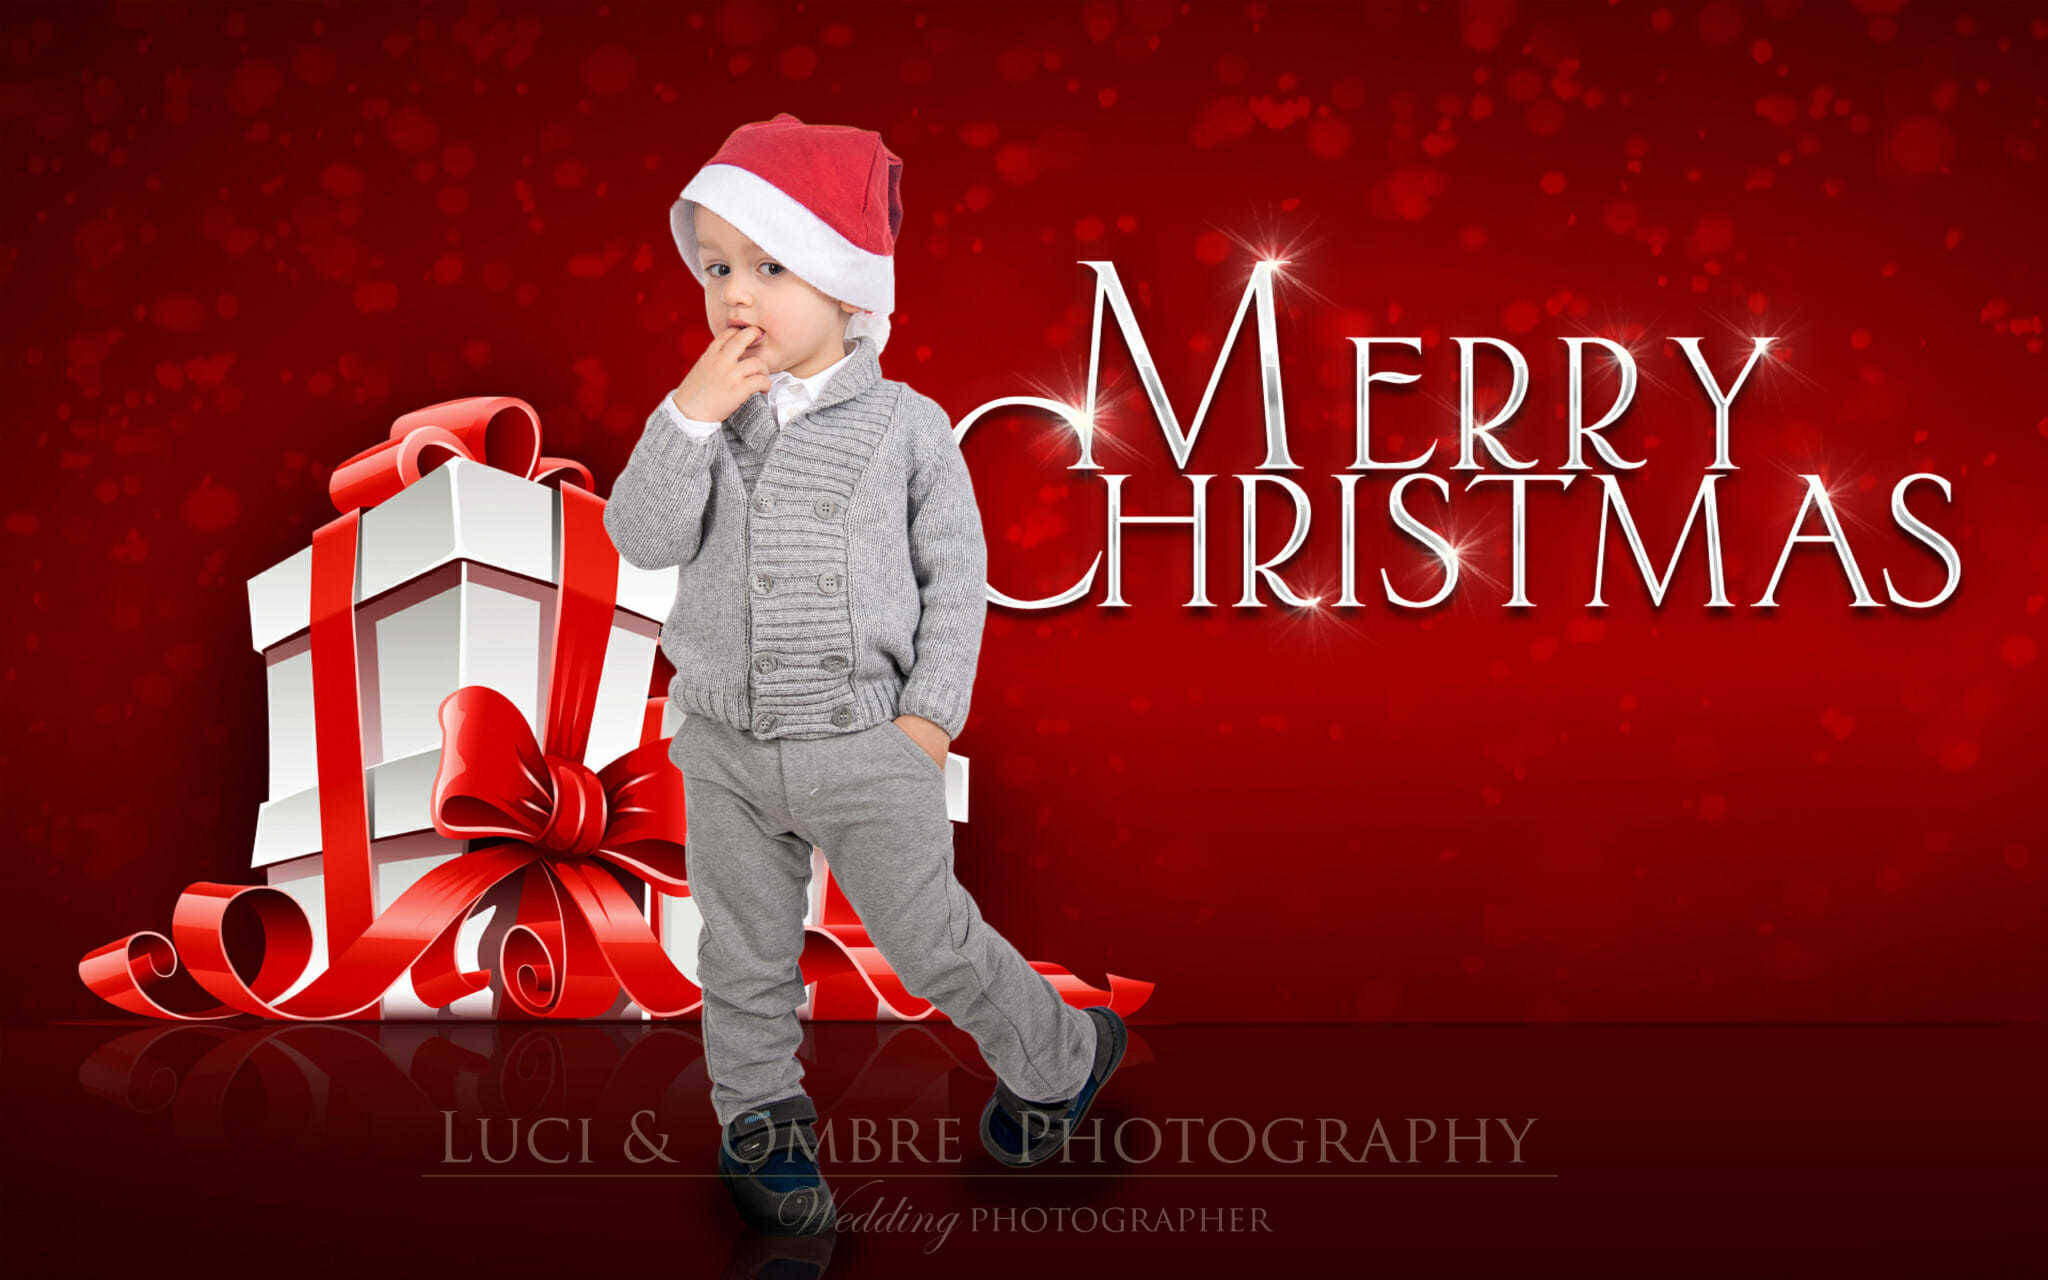 Merry Christmas Luci e ombre studio fotografico